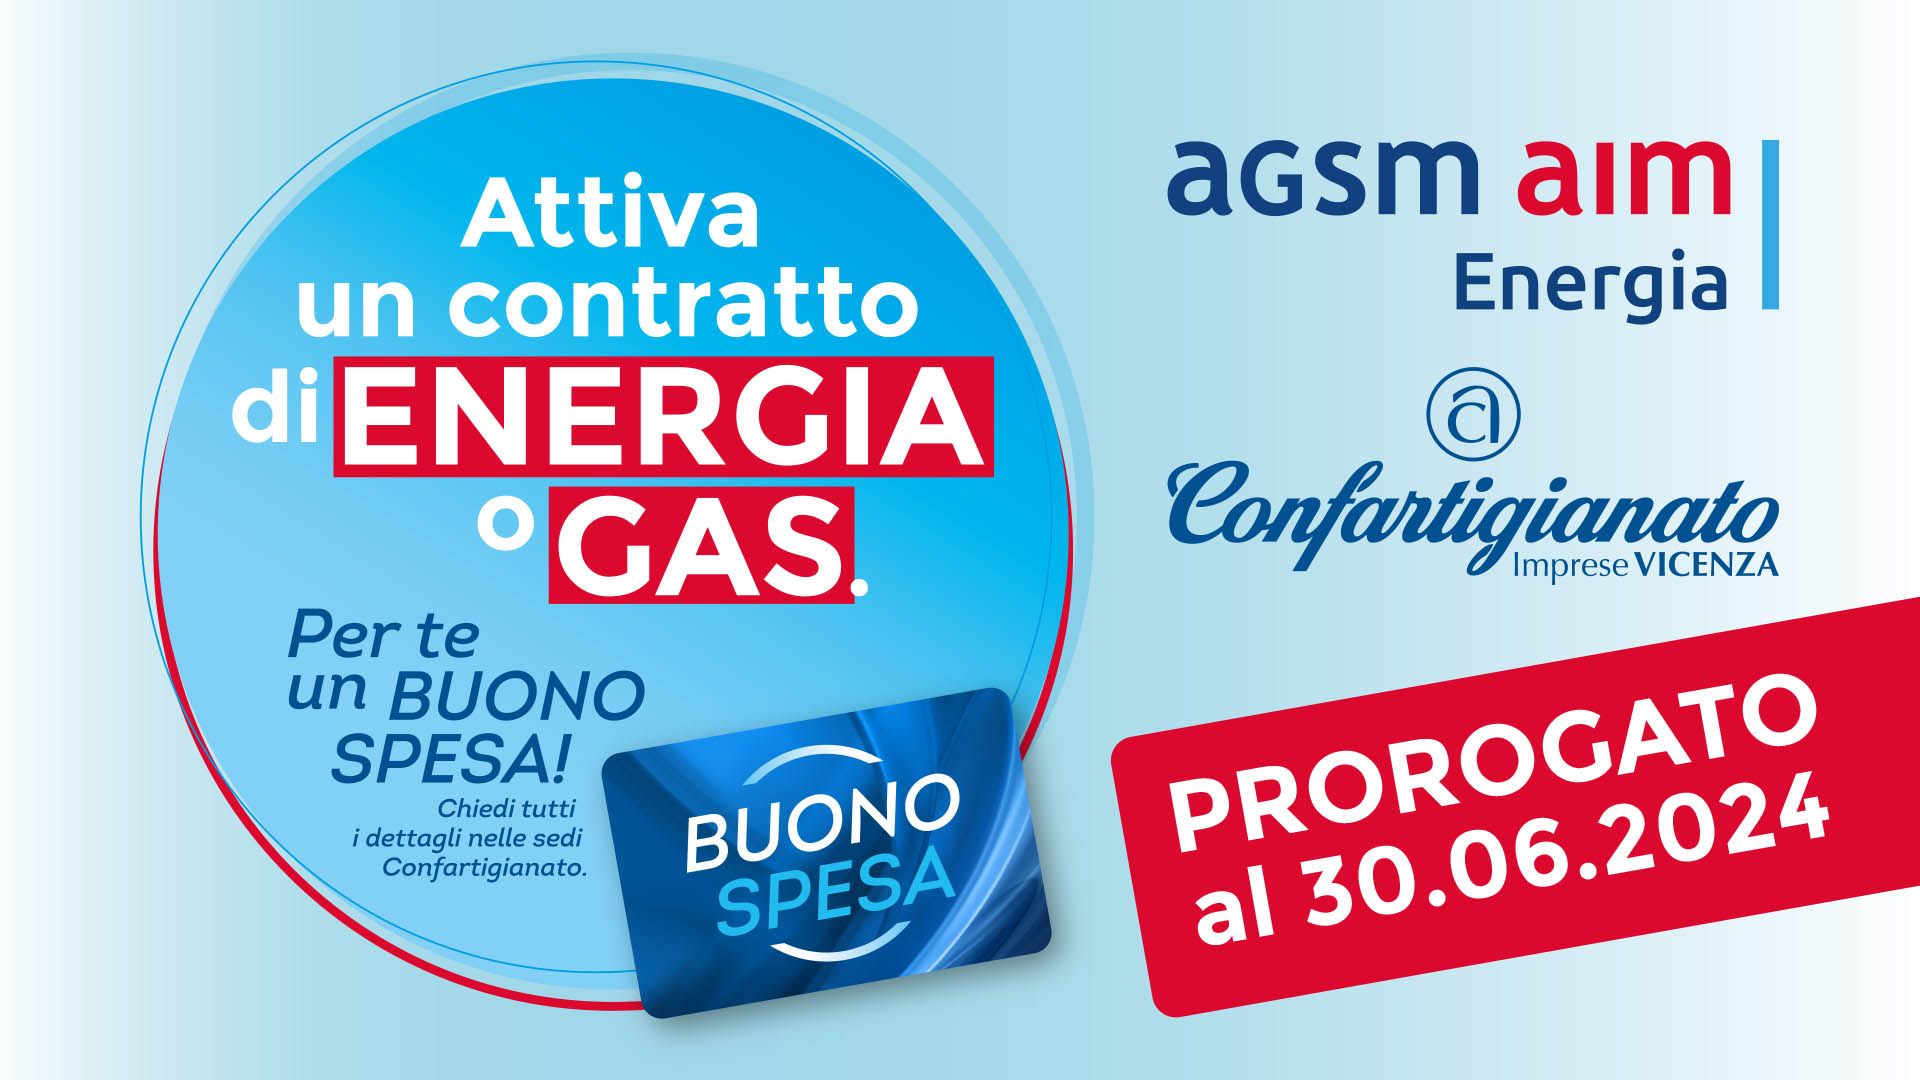 Promo AGSM AIM energia gas